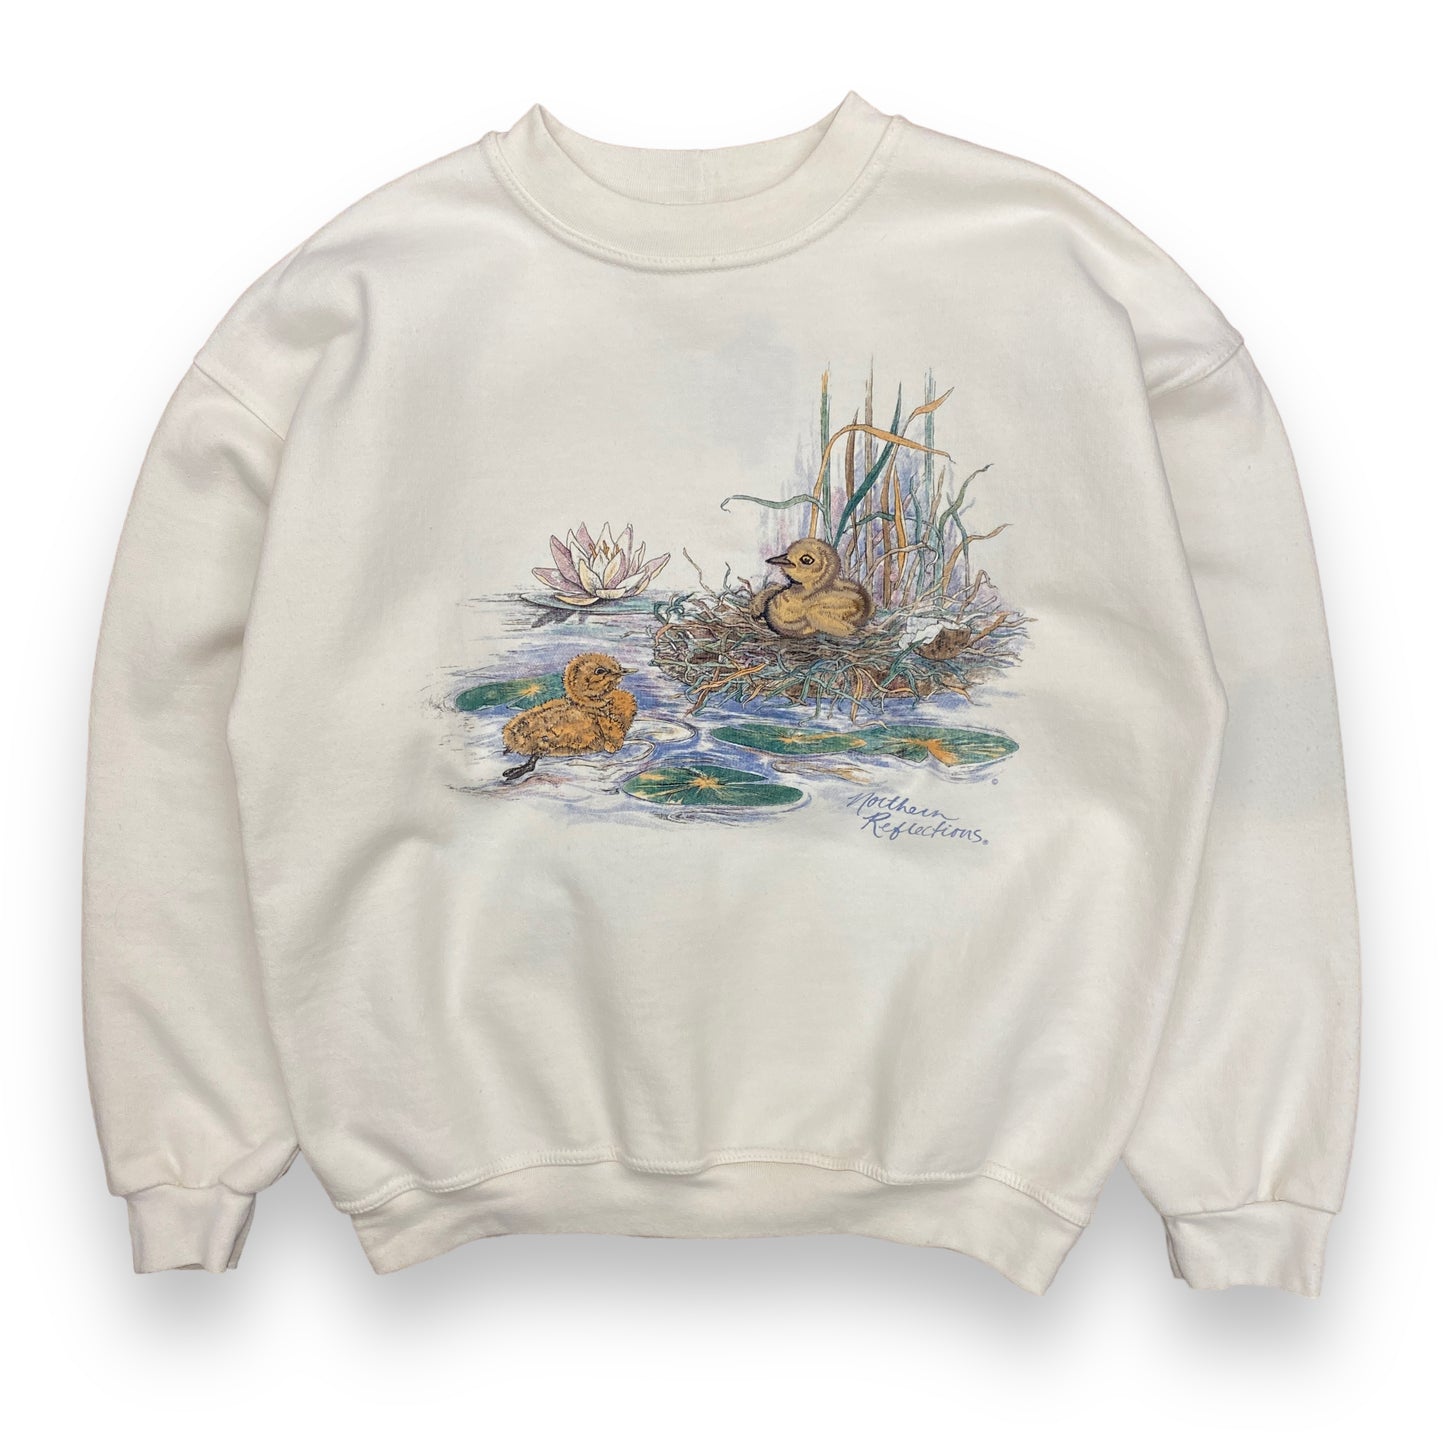 Vintage "Ducklings in a Pond" Crewneck Sweatshirt - Size Small